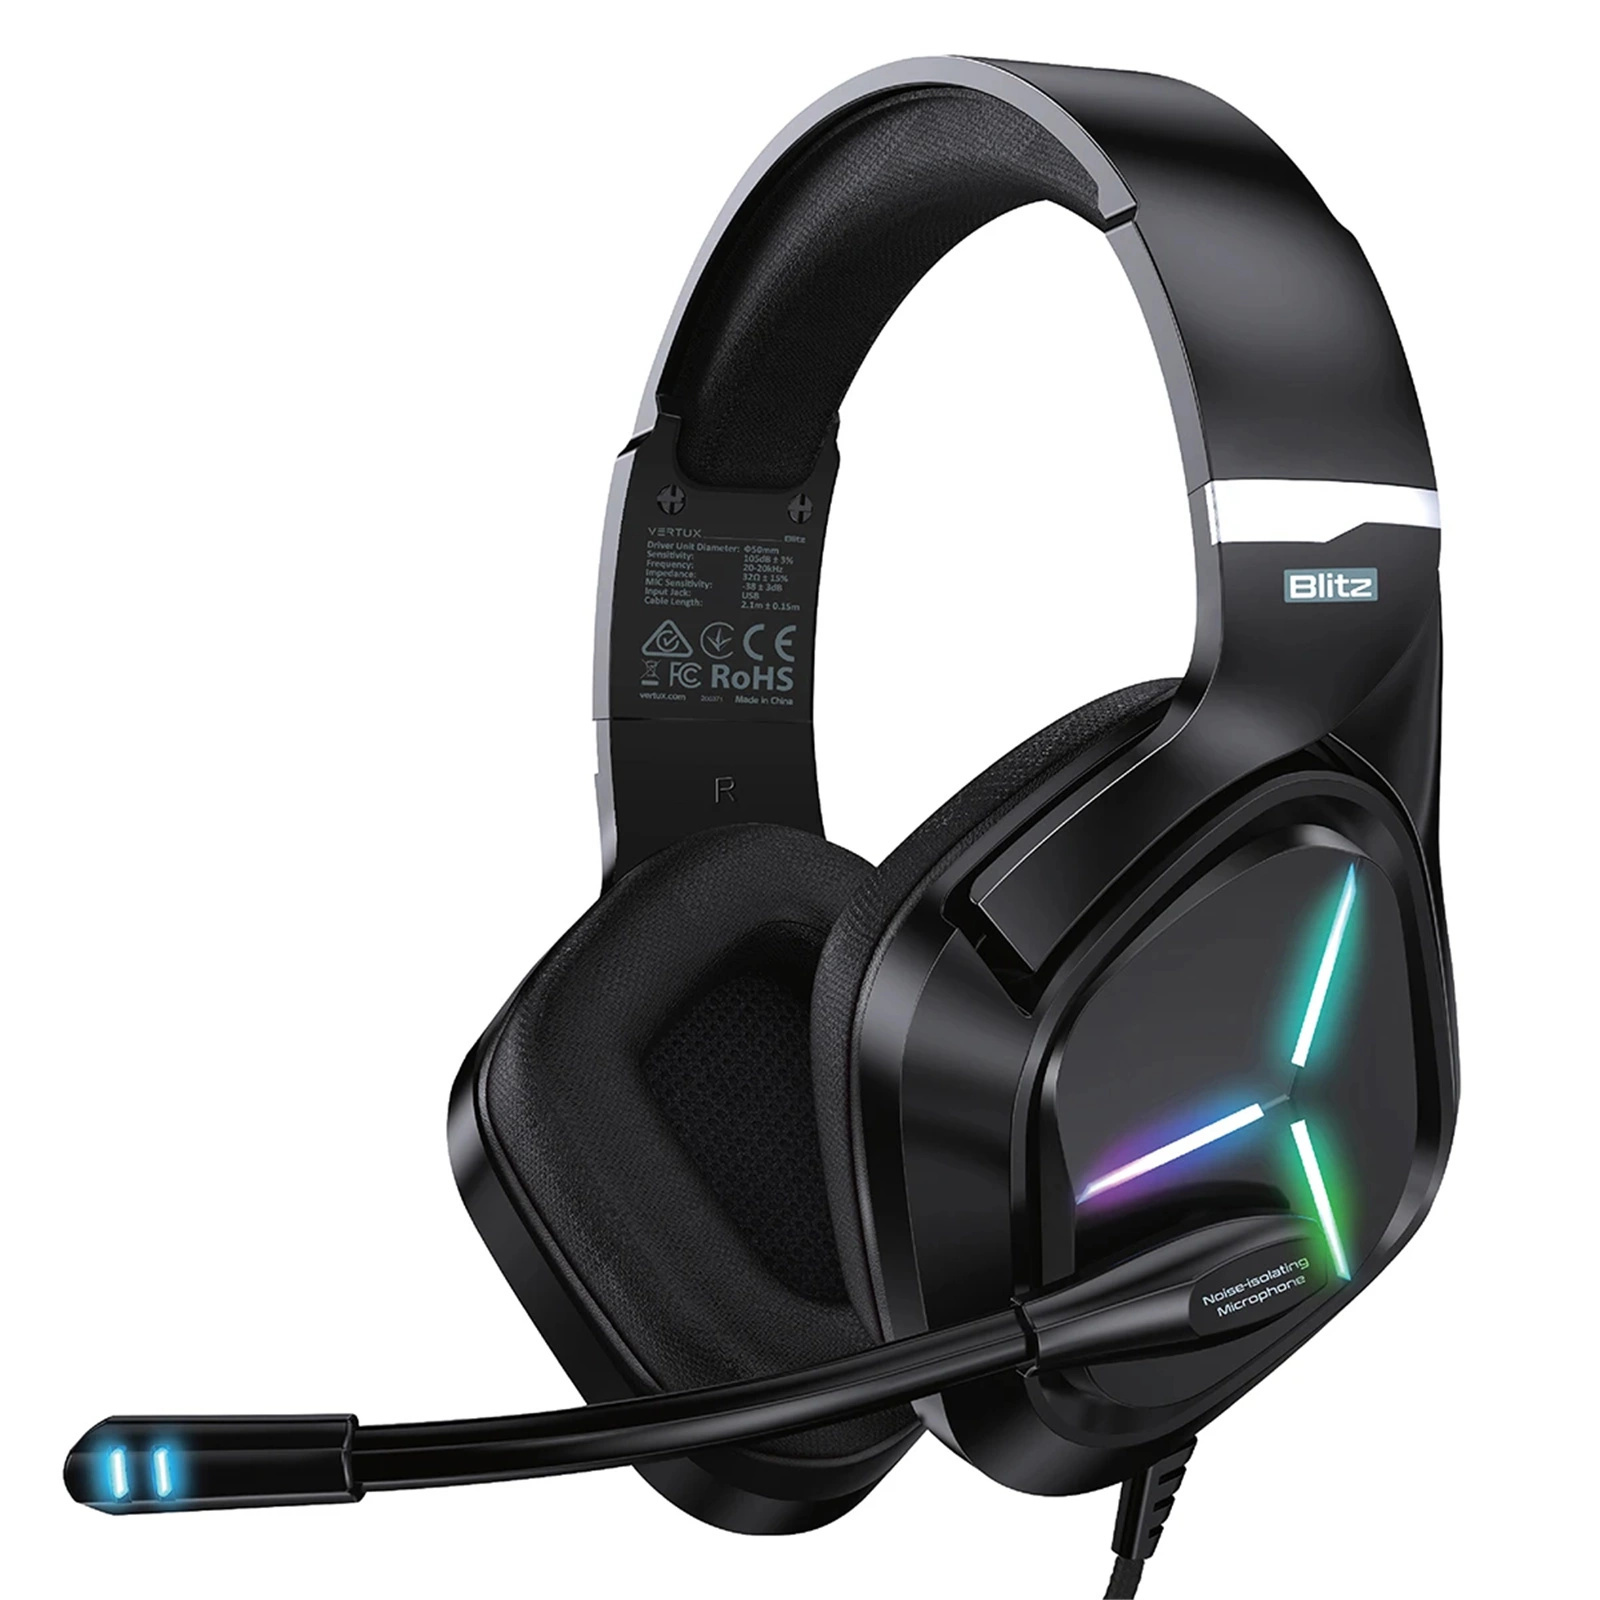 Vertux Blitz 7.1 Surround Sound Gaming Headphones (Black)